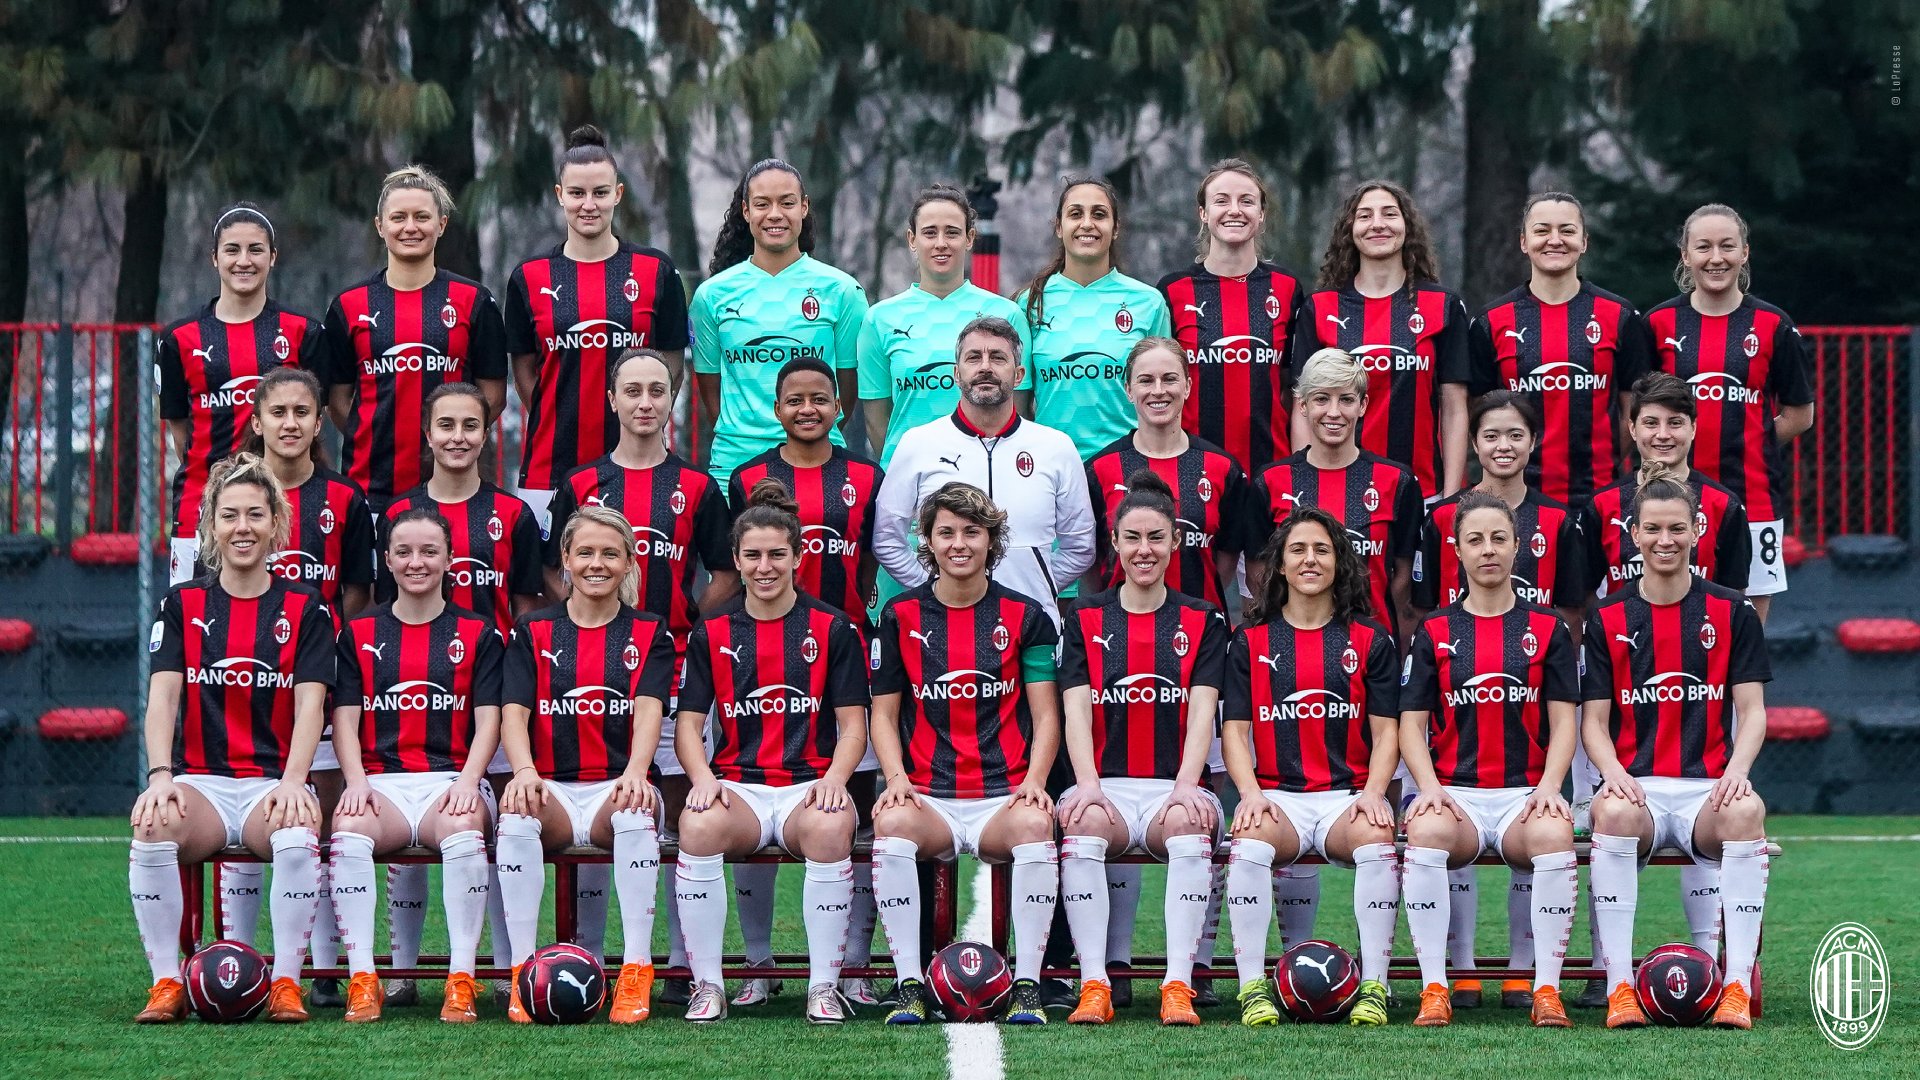 Trives Bøje Rough sleep AC Milan on Twitter: "📸 Season 2020/21 Women's First Team Picture 📸  Proudly Rossonere ❤️🖤 #FollowTheRossonere #SempreMilan  https://t.co/mY0Hi93FTi" / Twitter